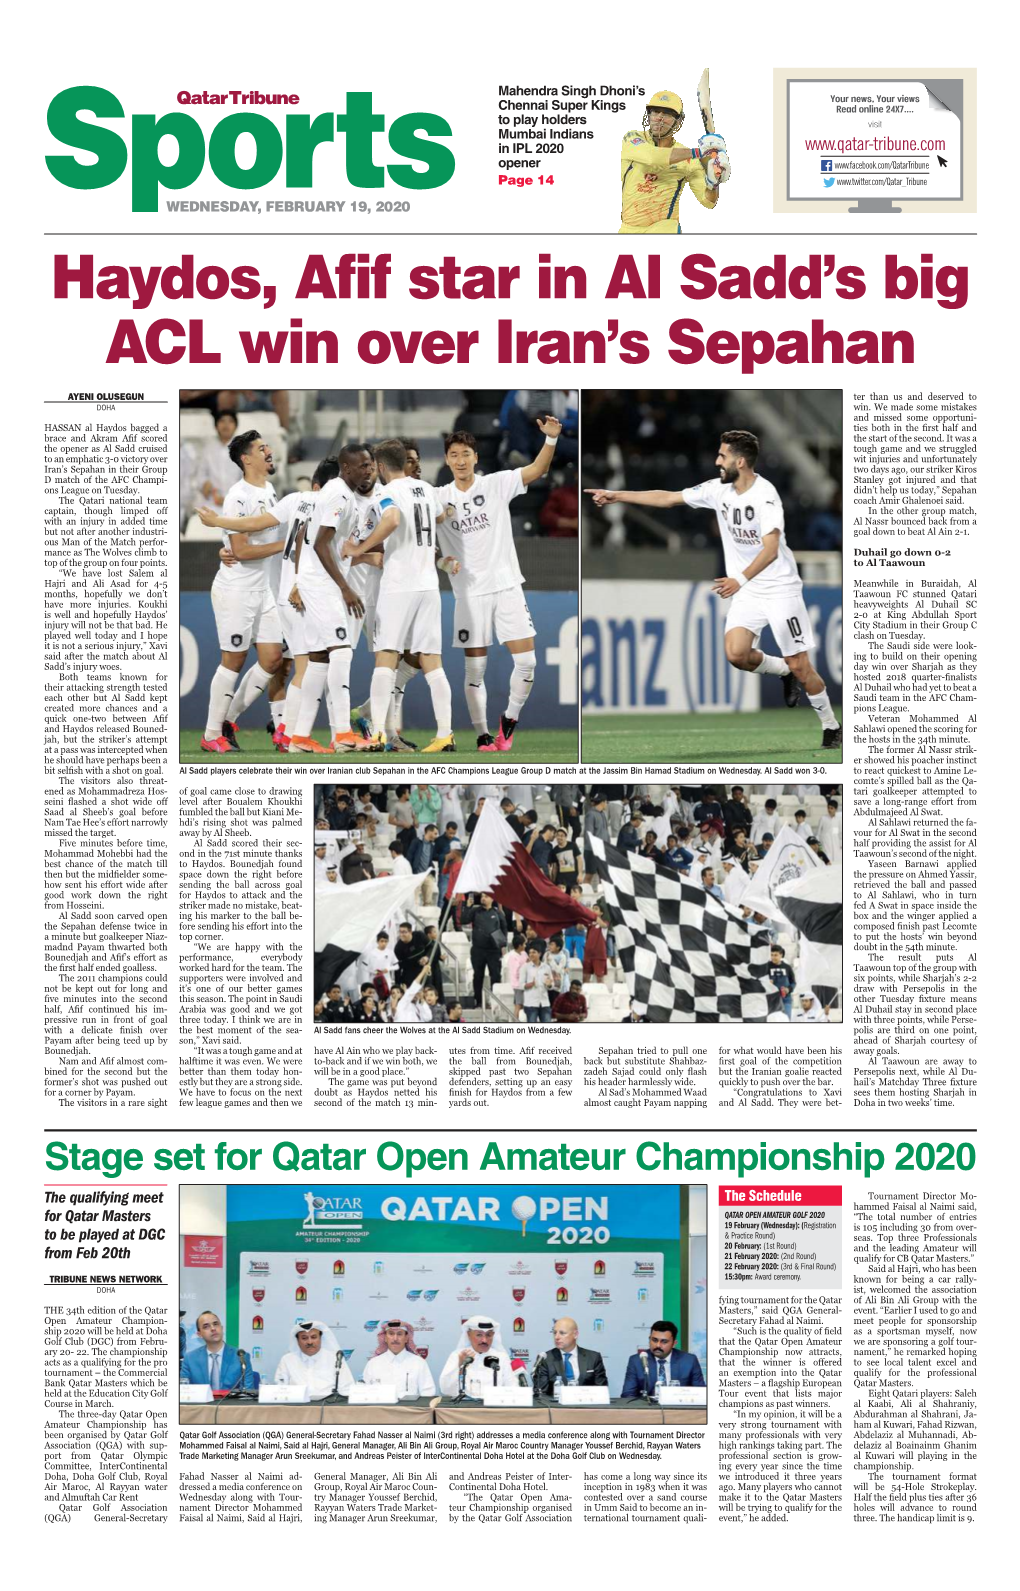 Haydos, Afif Star in Al Sadd's Big Acl Win Over Iran's Sepahan